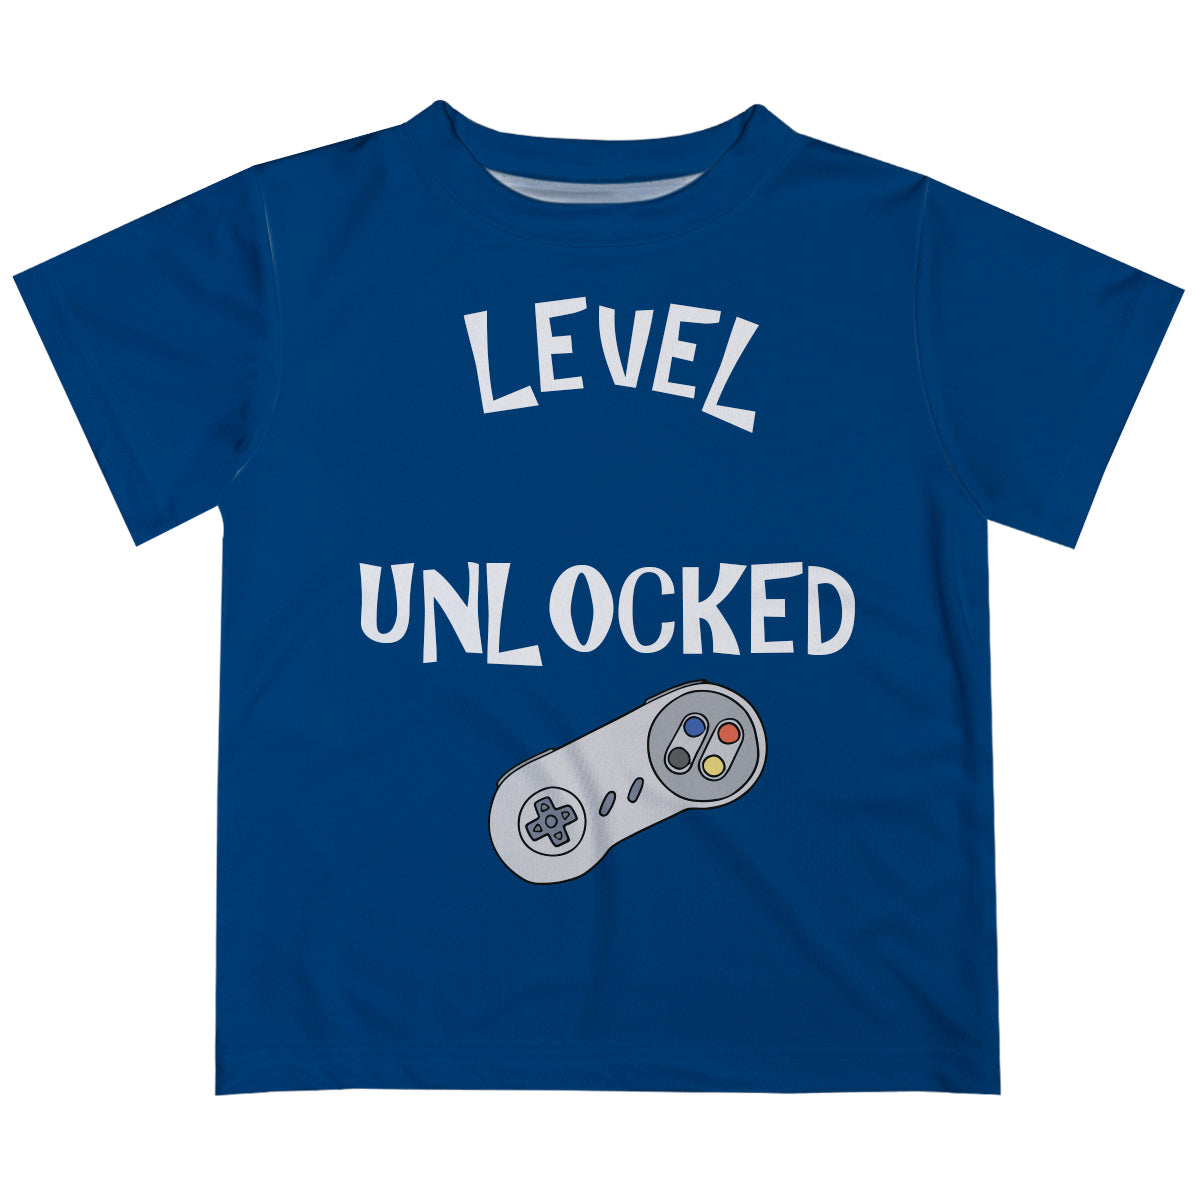 Level Your Age Unlocked Navy Short Sleeve Tee Shirt - Wimziy&Co.